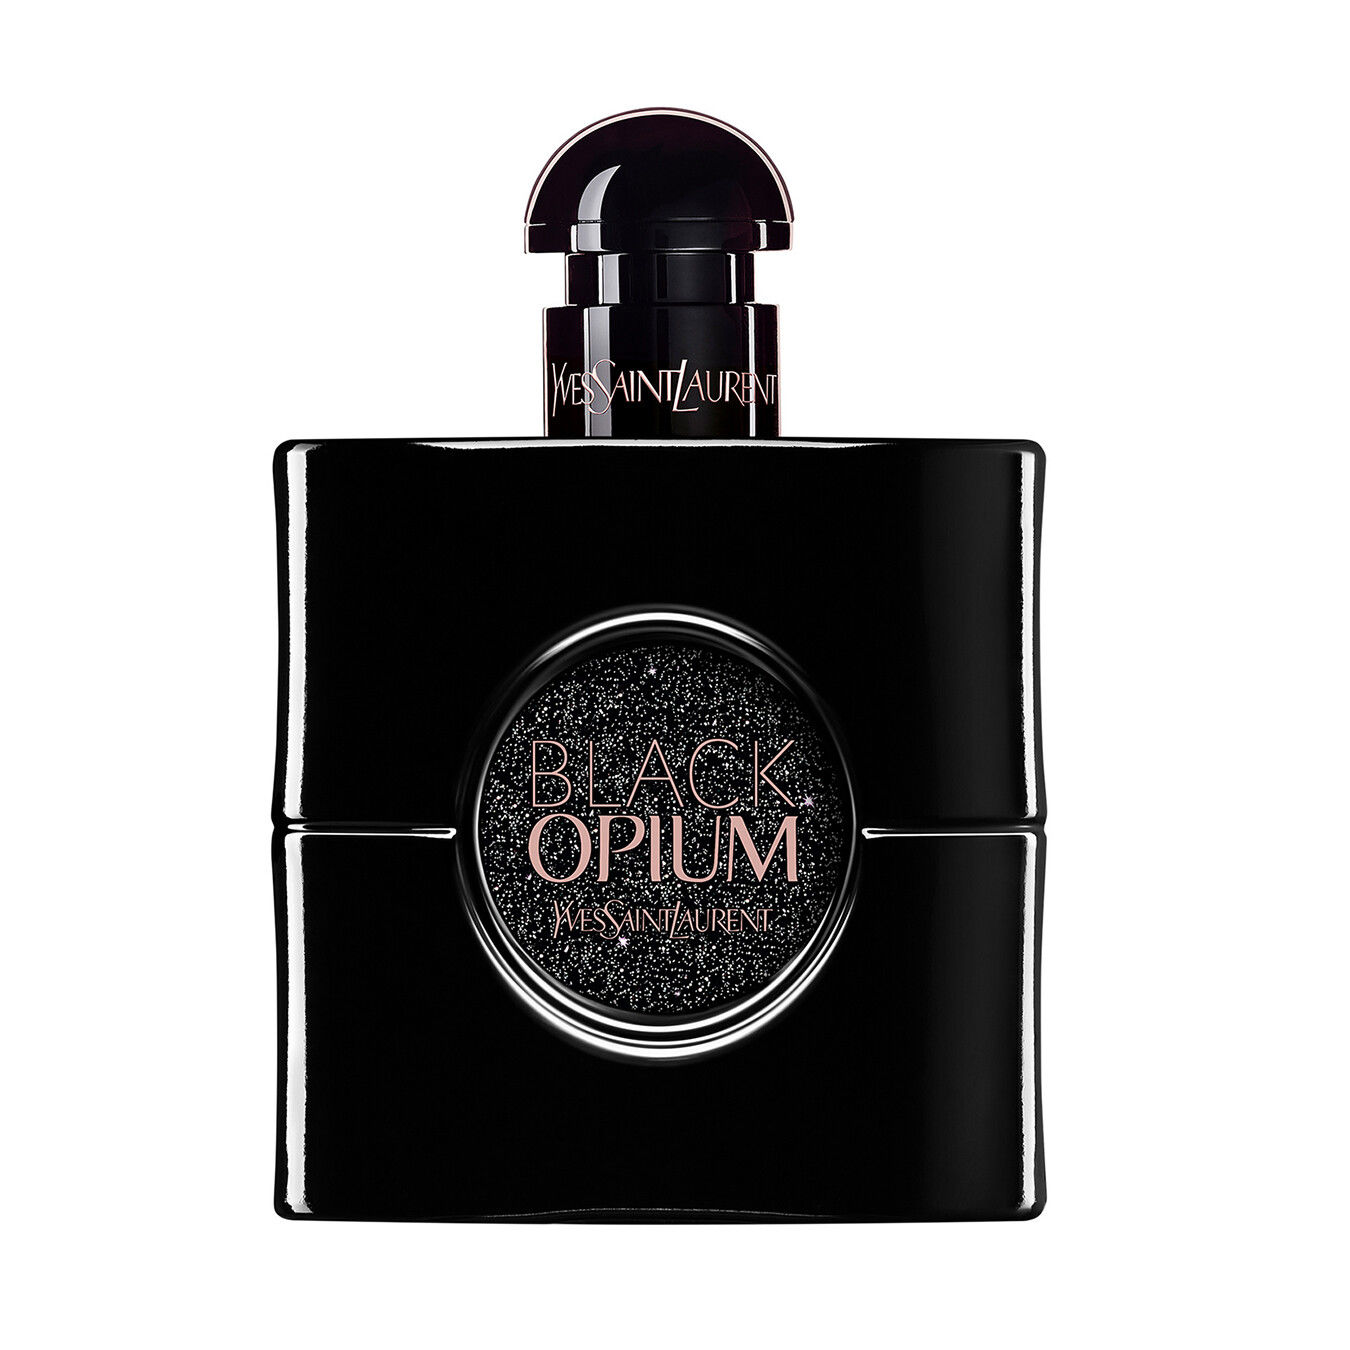 Yves Saint Laurent Black Opium Le Parfum Parfum 50ml Damen von Yves Saint Laurent